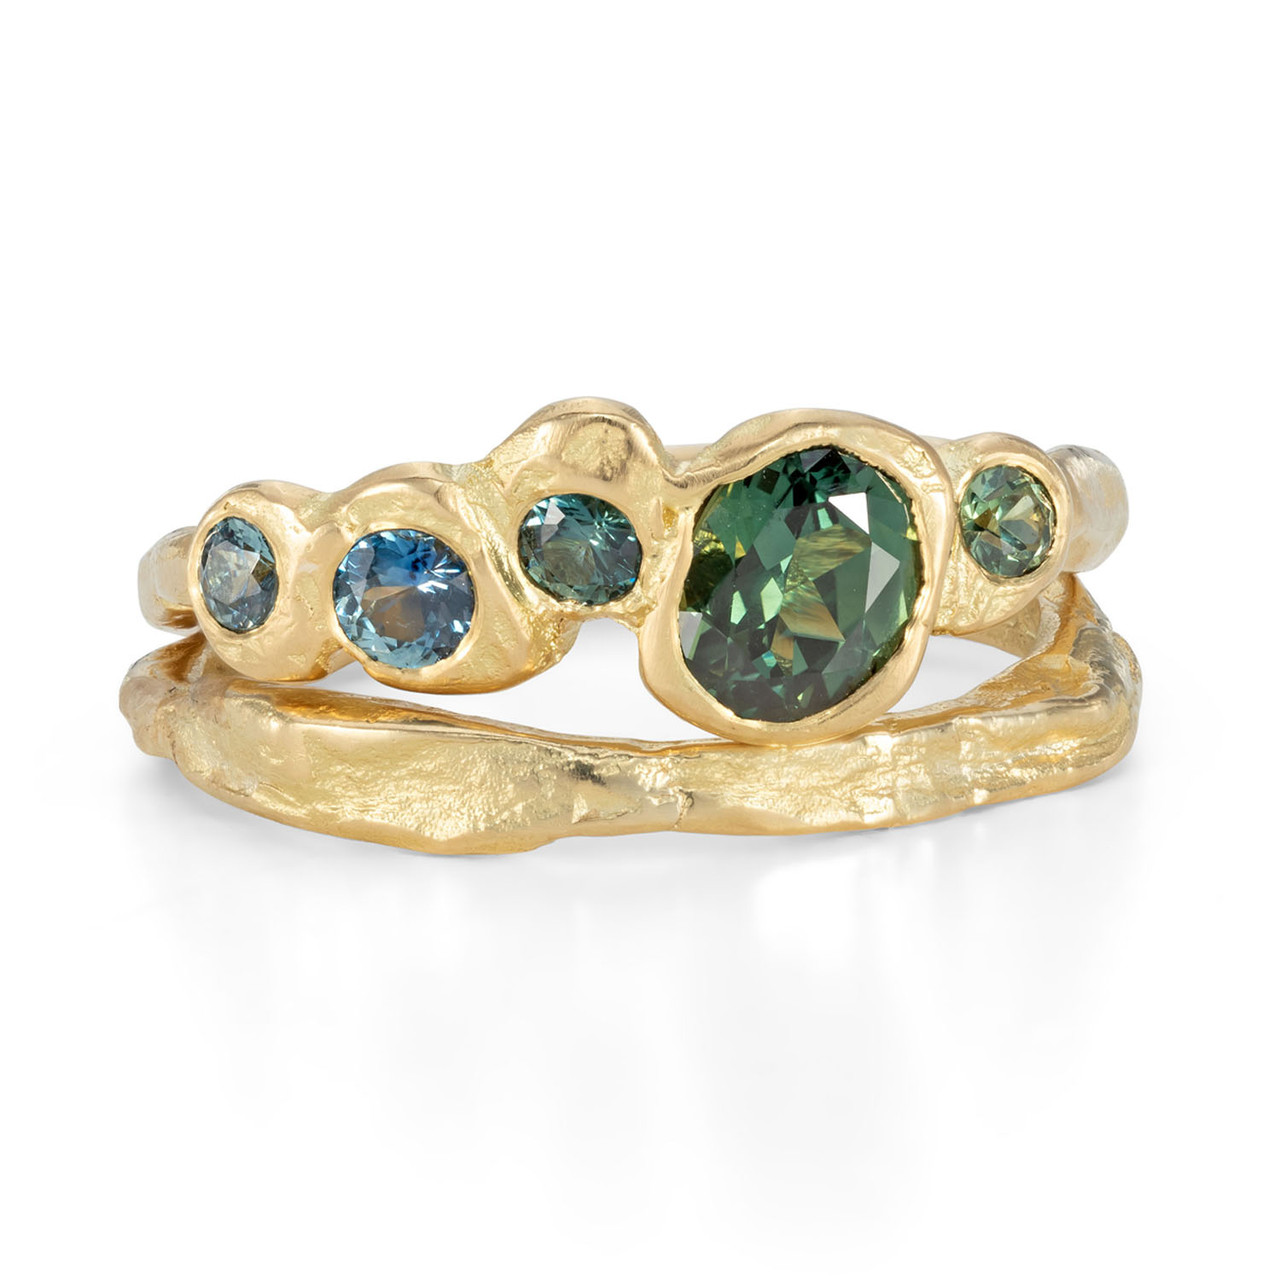 Havens Sapphire Ring, Emily Nixon, tomfoolery